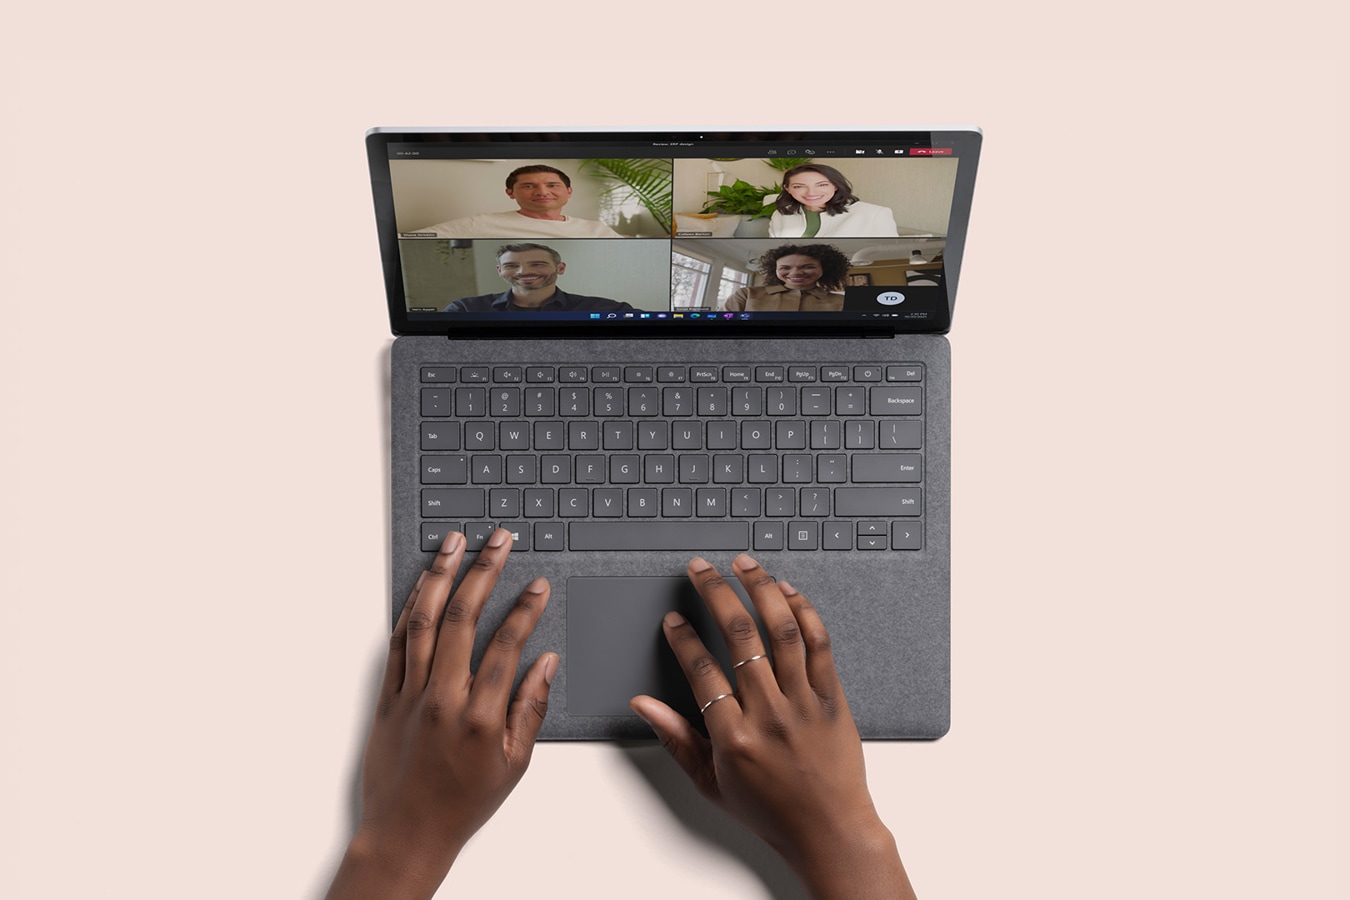 Laptop 4(플래티넘) 디바이스 하향식 보기. 화면에는 Microsoft Teams가 표시되어 있습니다.
